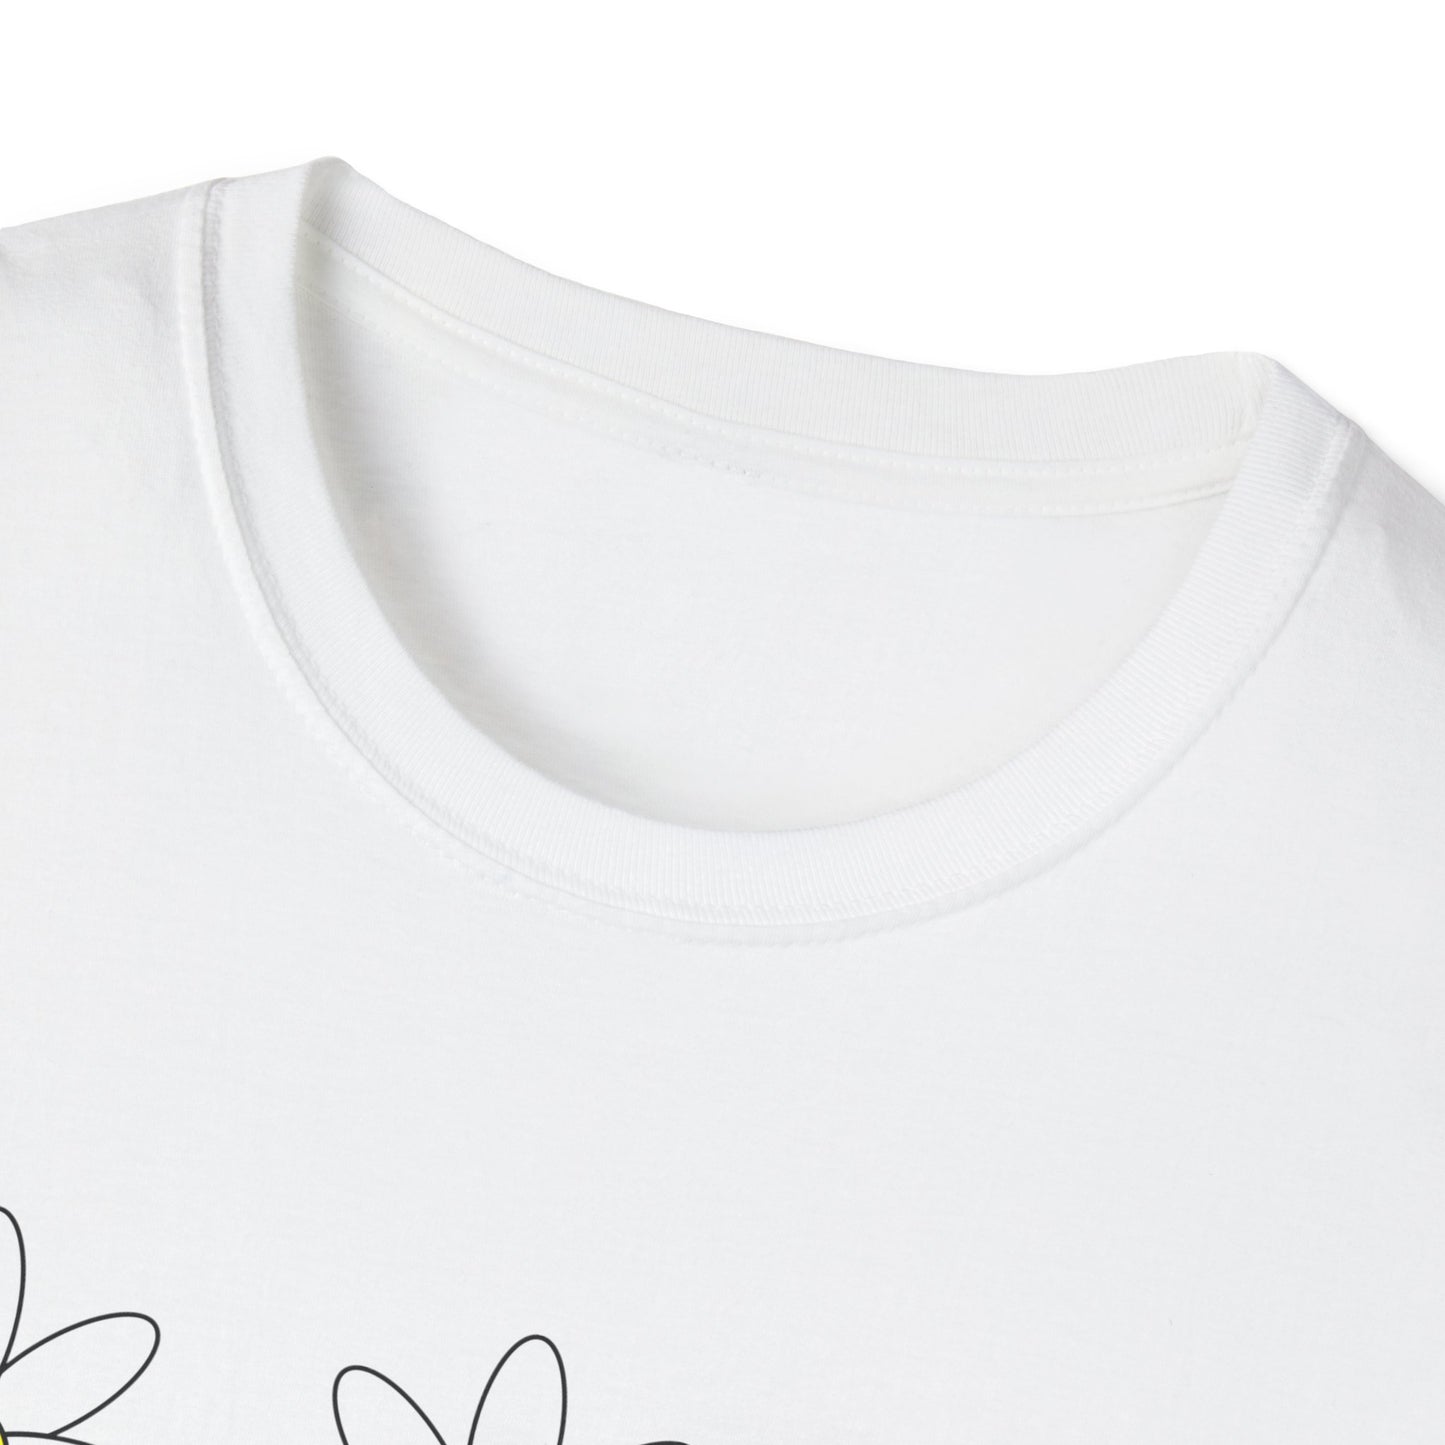 Maisie Daisy Softstyle T-Shirt